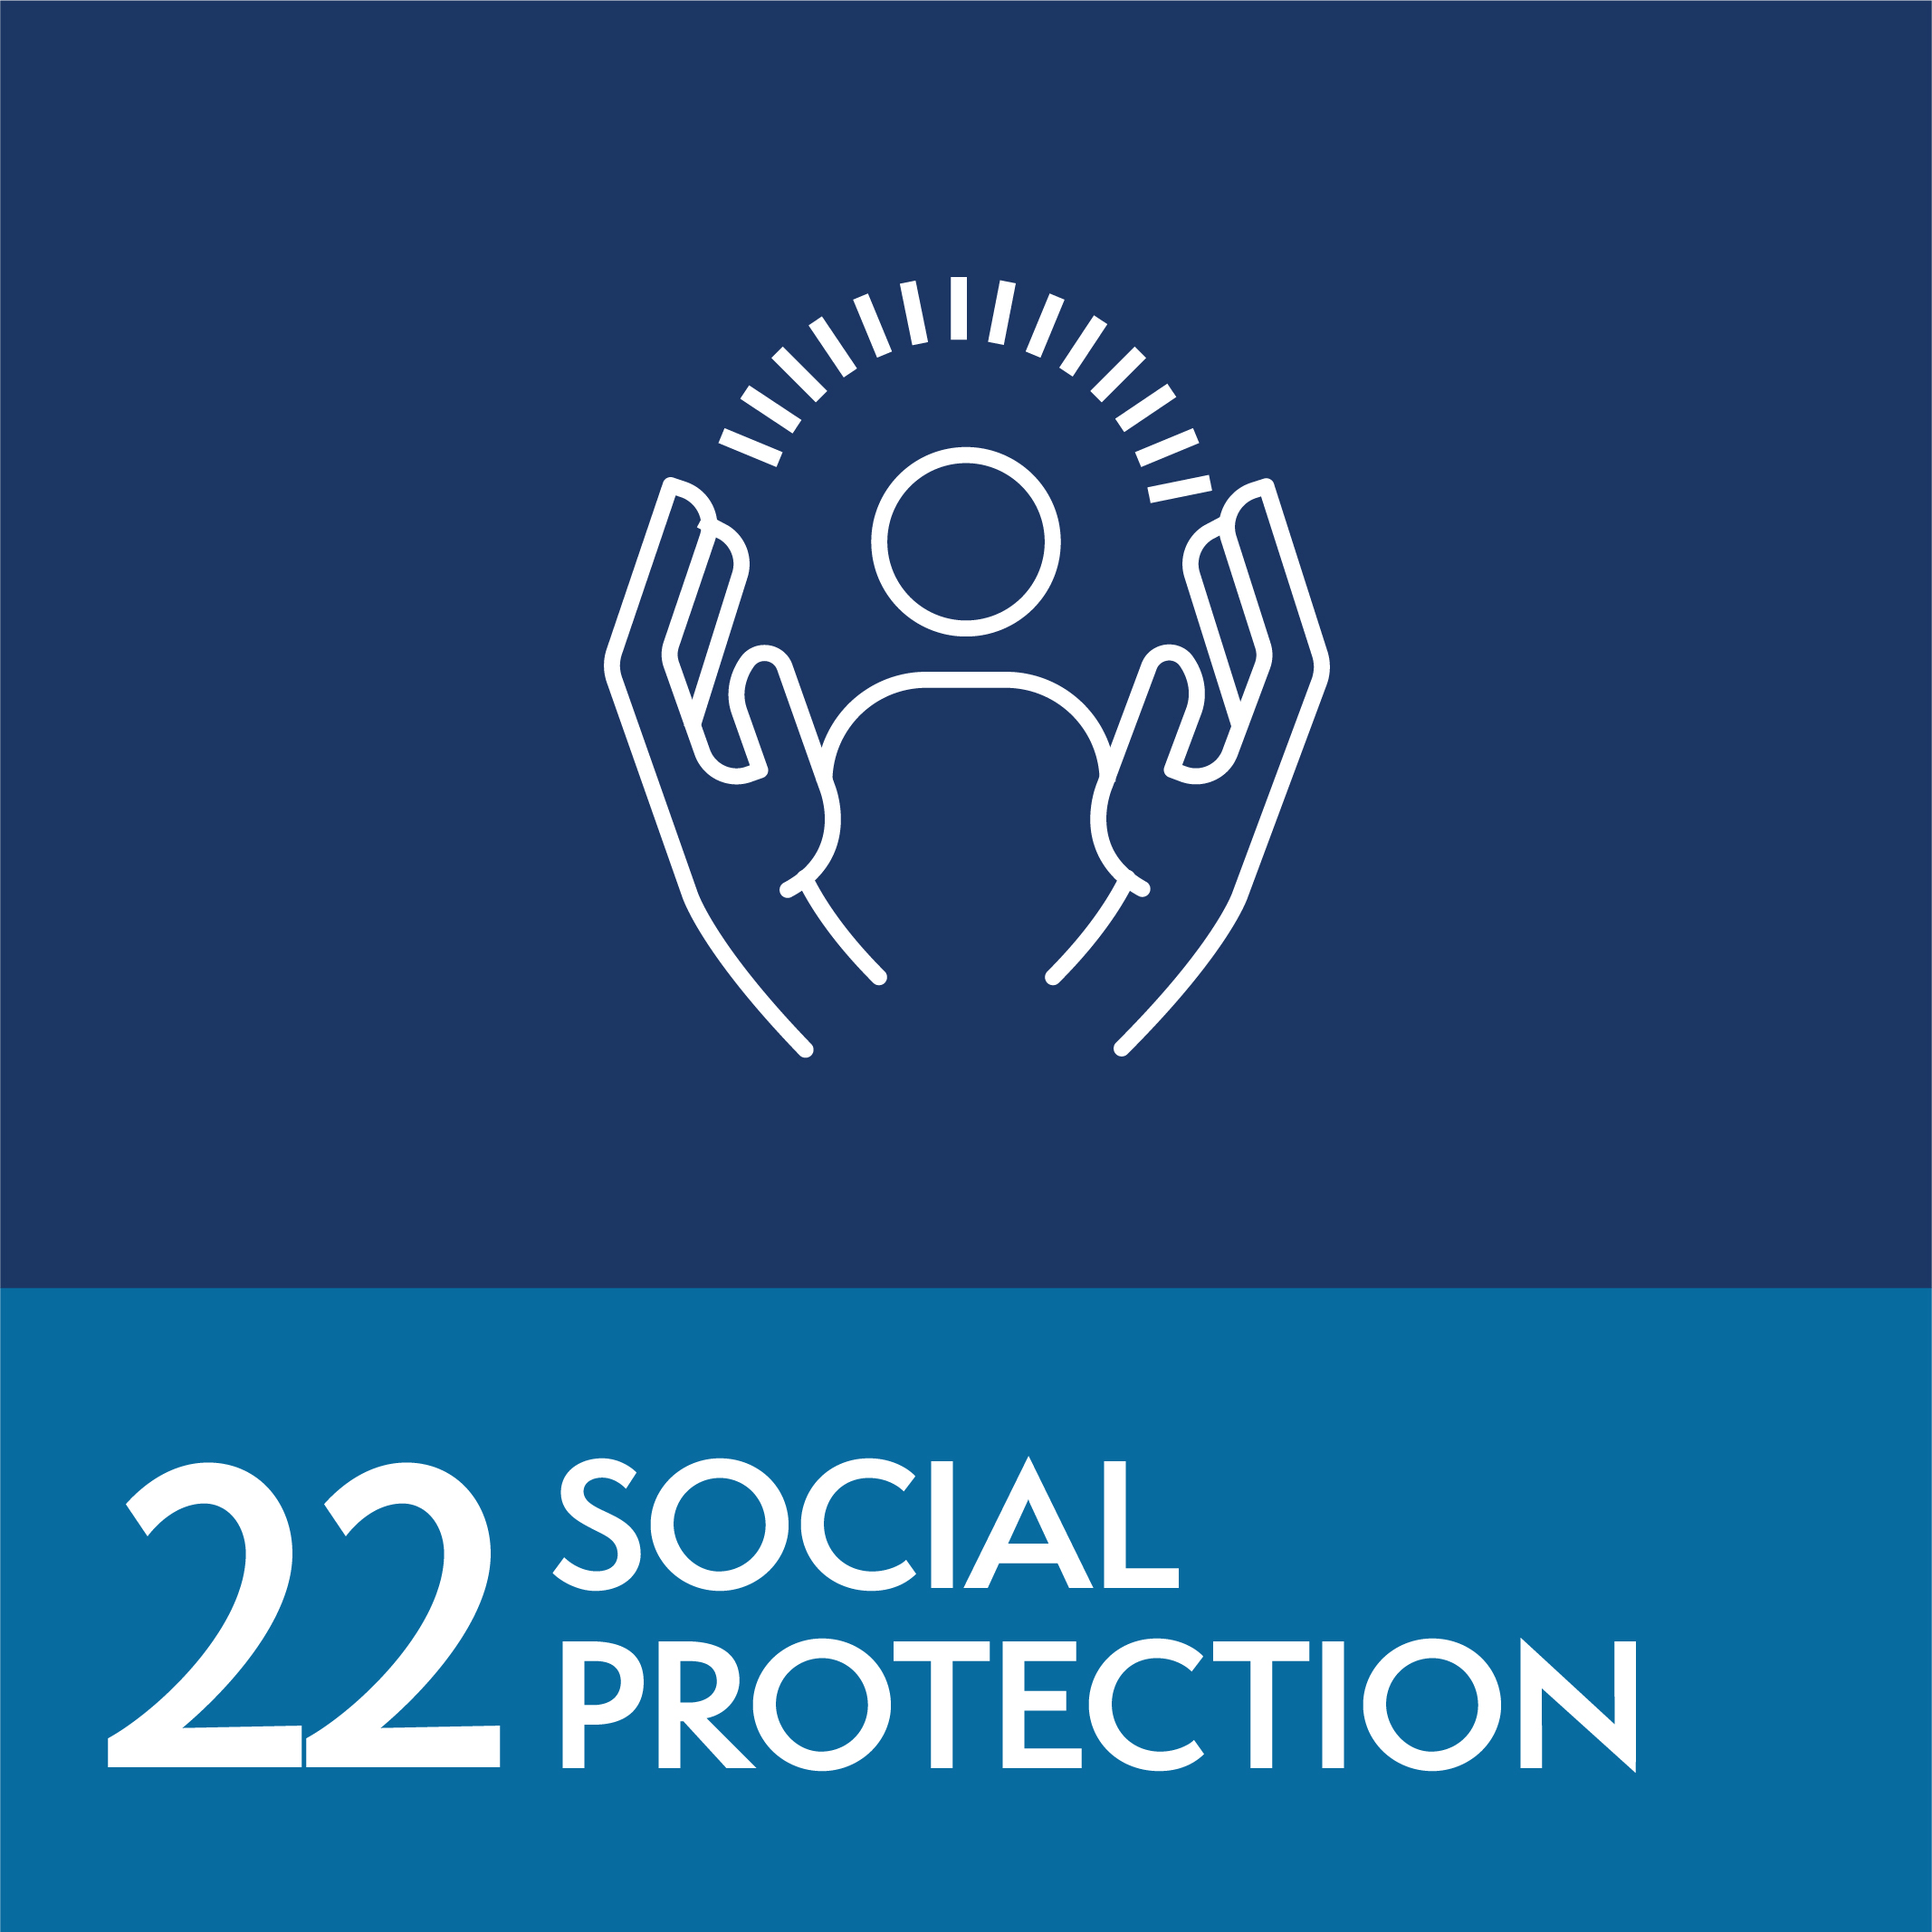 22 - Social protection